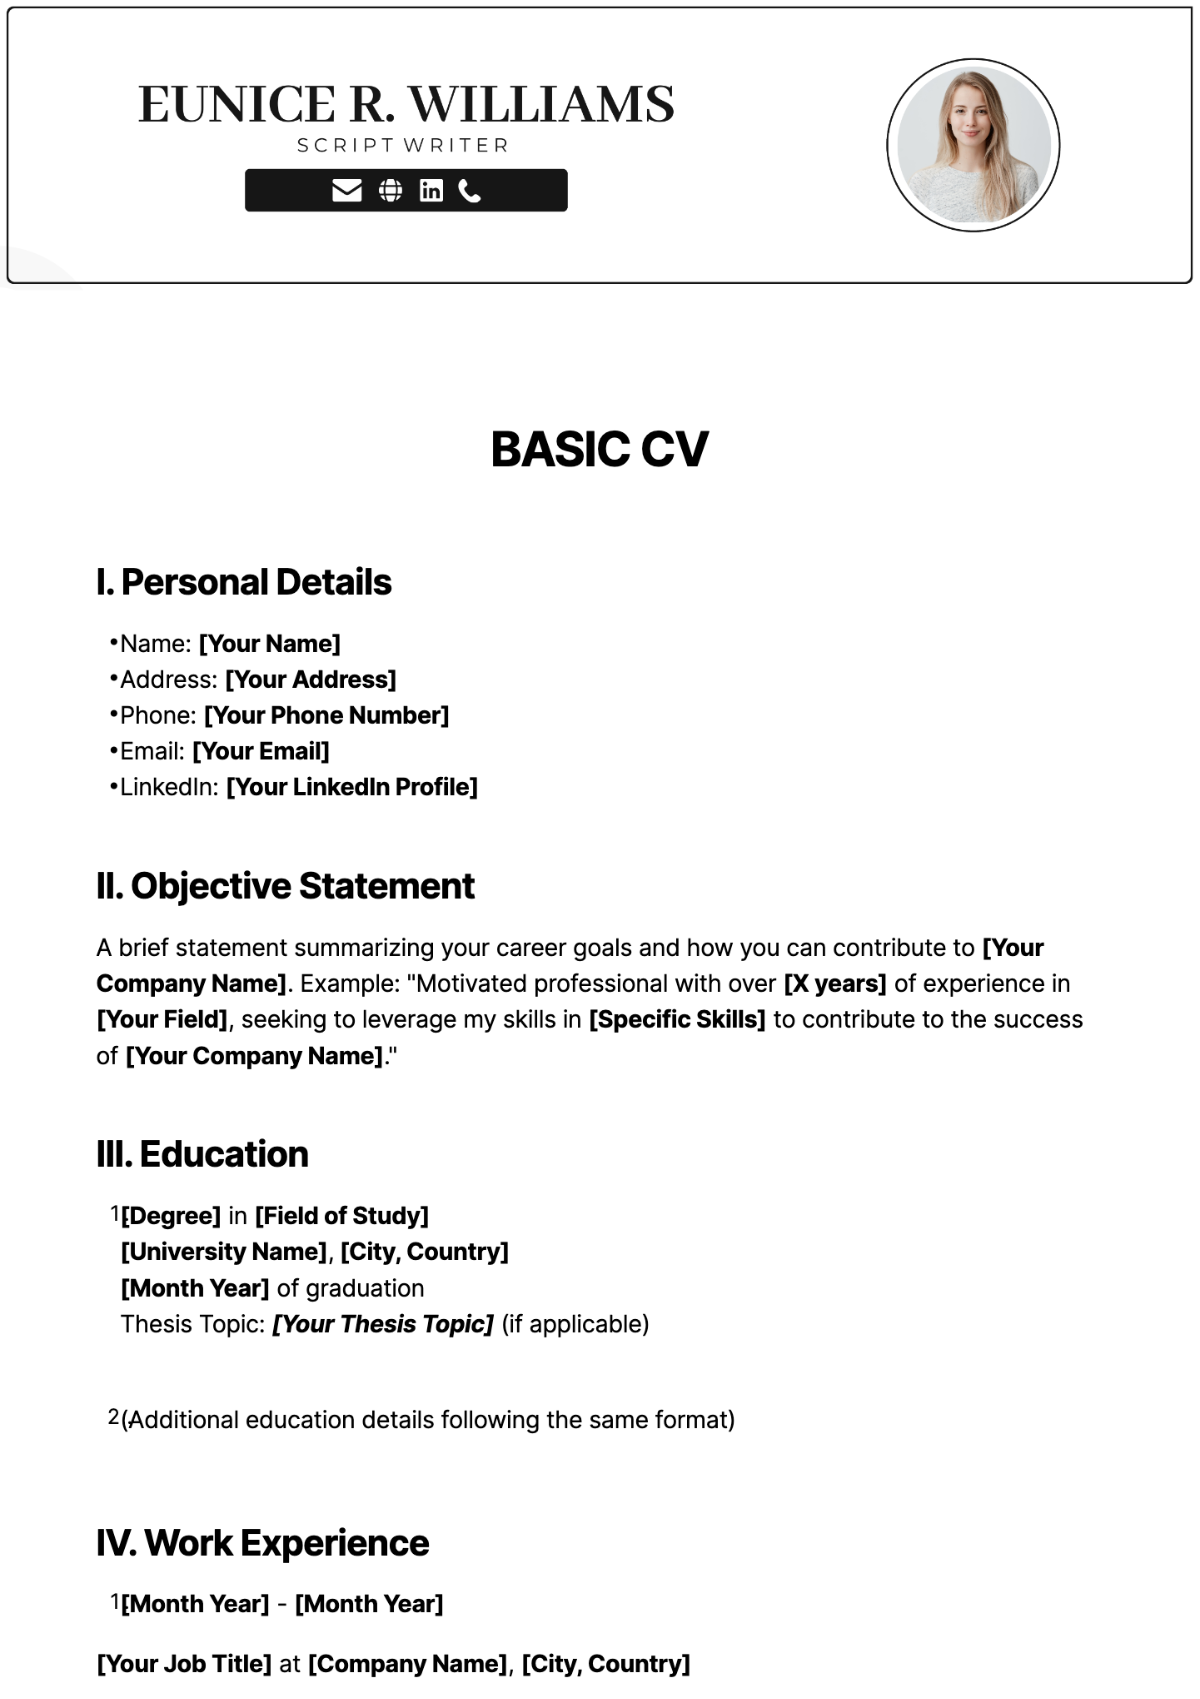 Basic CV Template